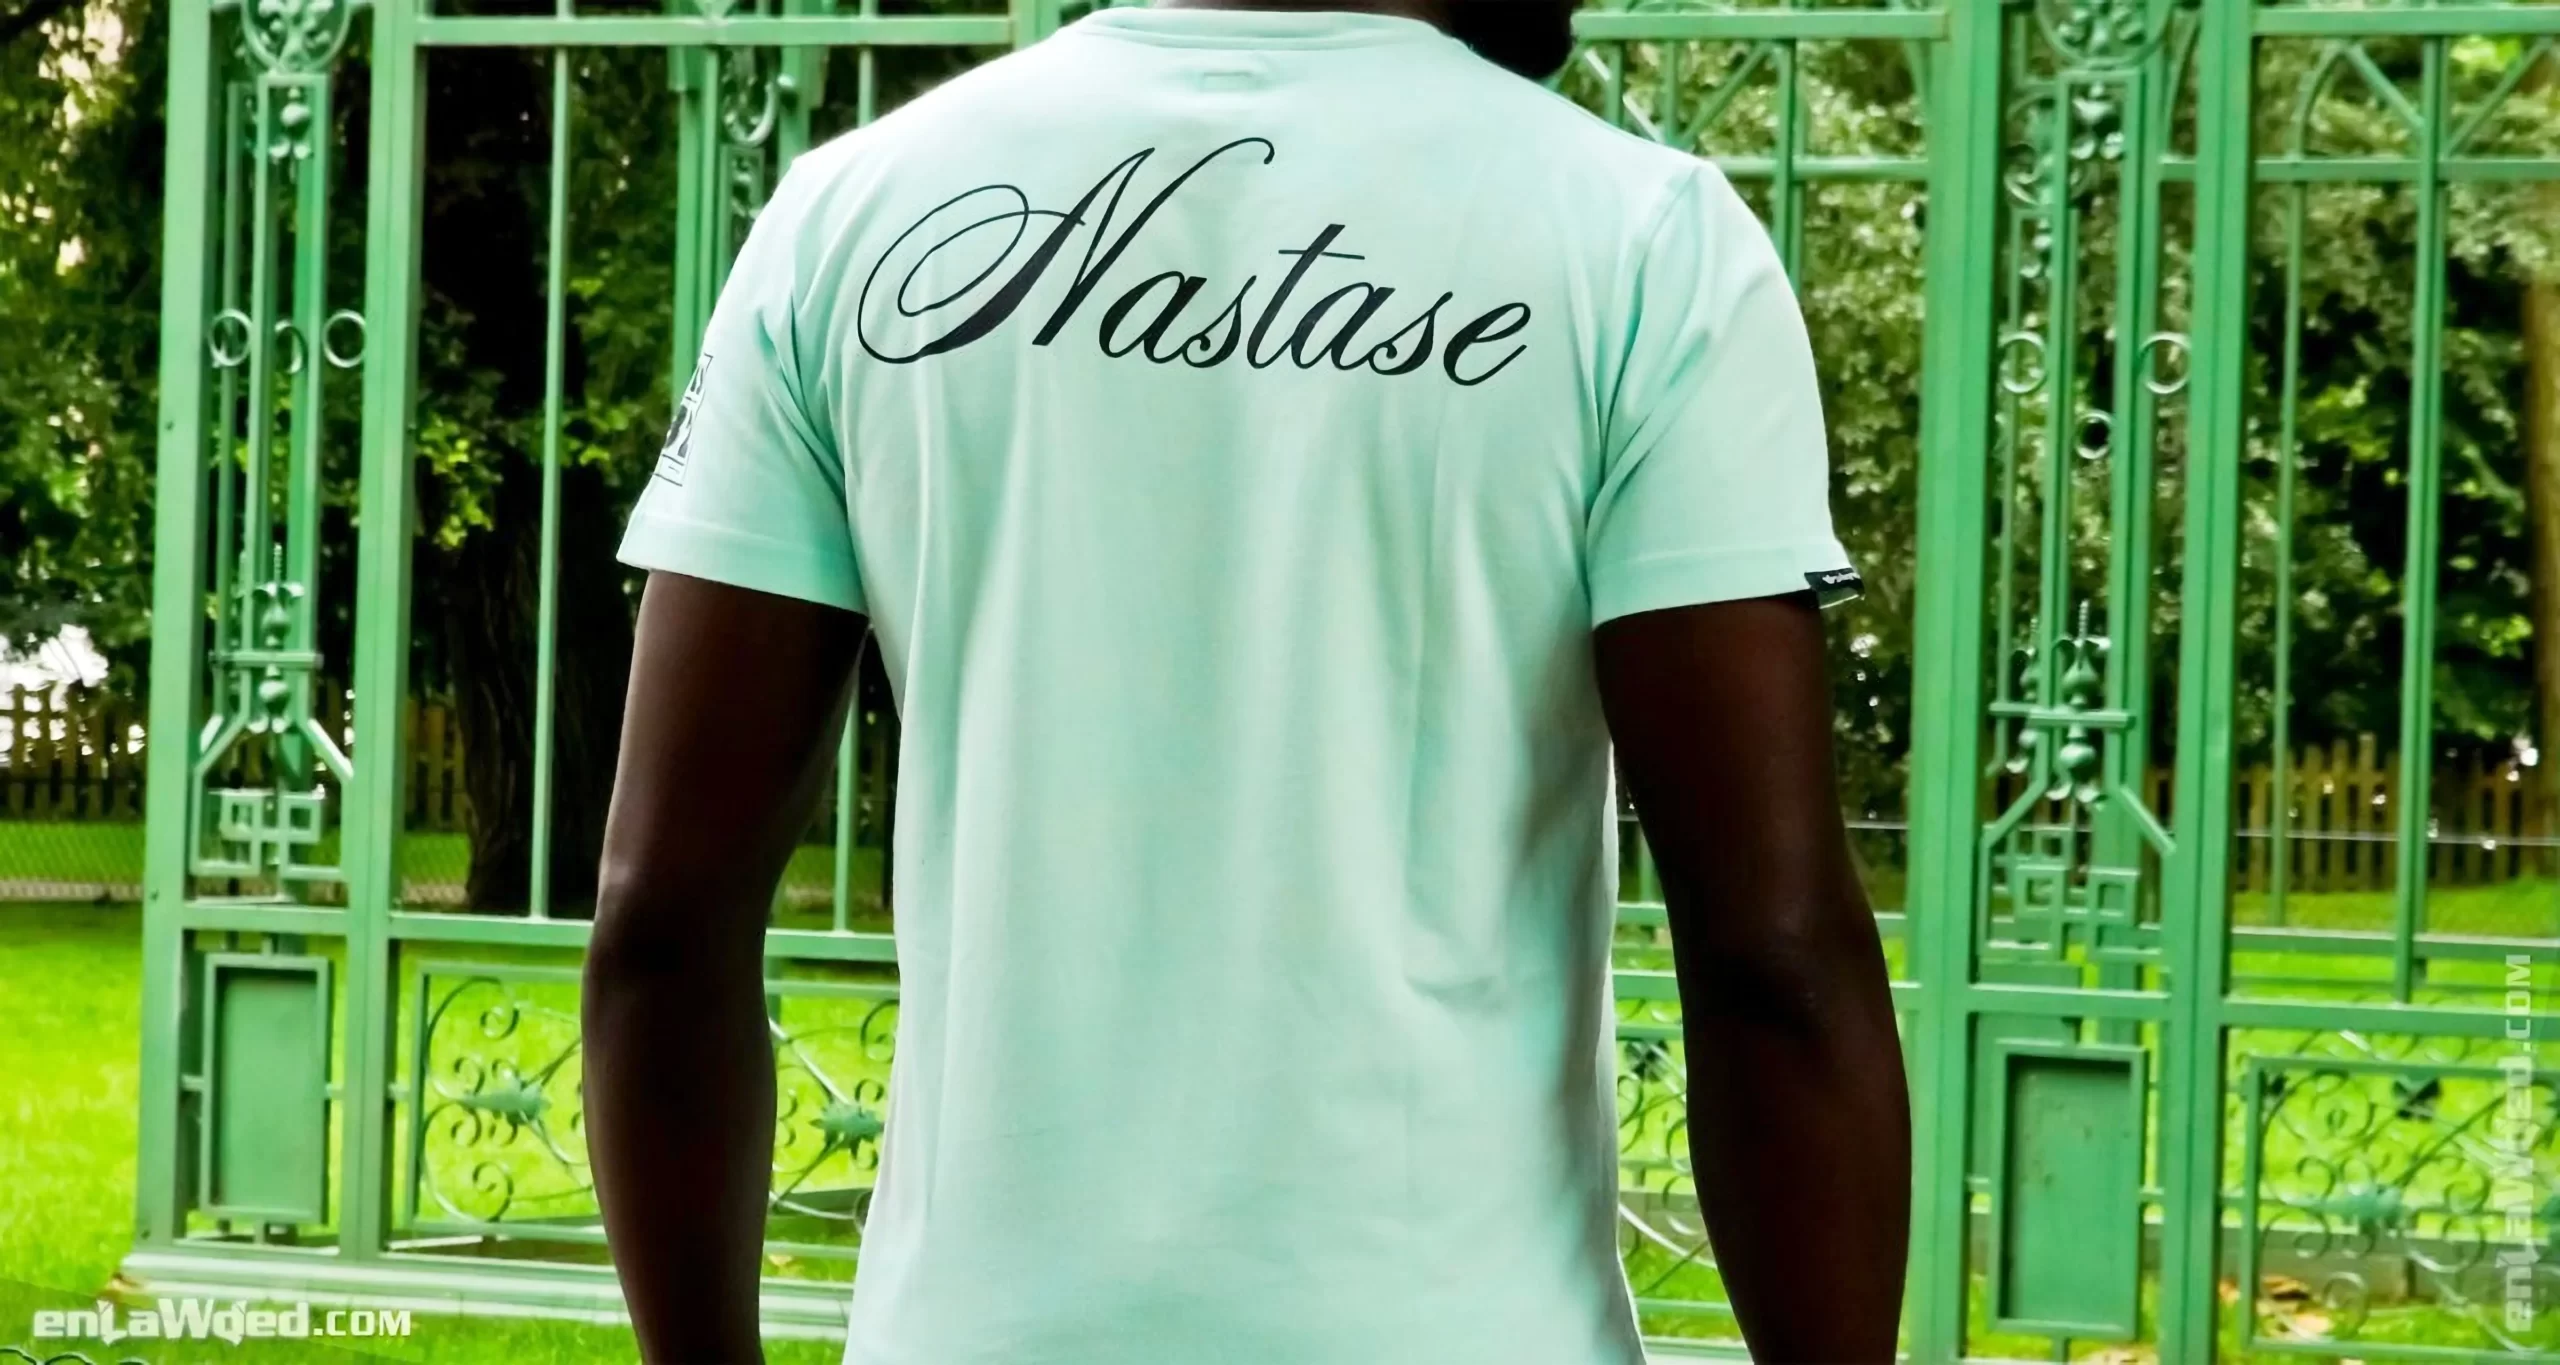 Men’s 2006 Ilie Nastase Player’s Club T-Shirt by Adidas: Stoic (EnLawded.com file #lmchdkwnf1xnexgnsur)